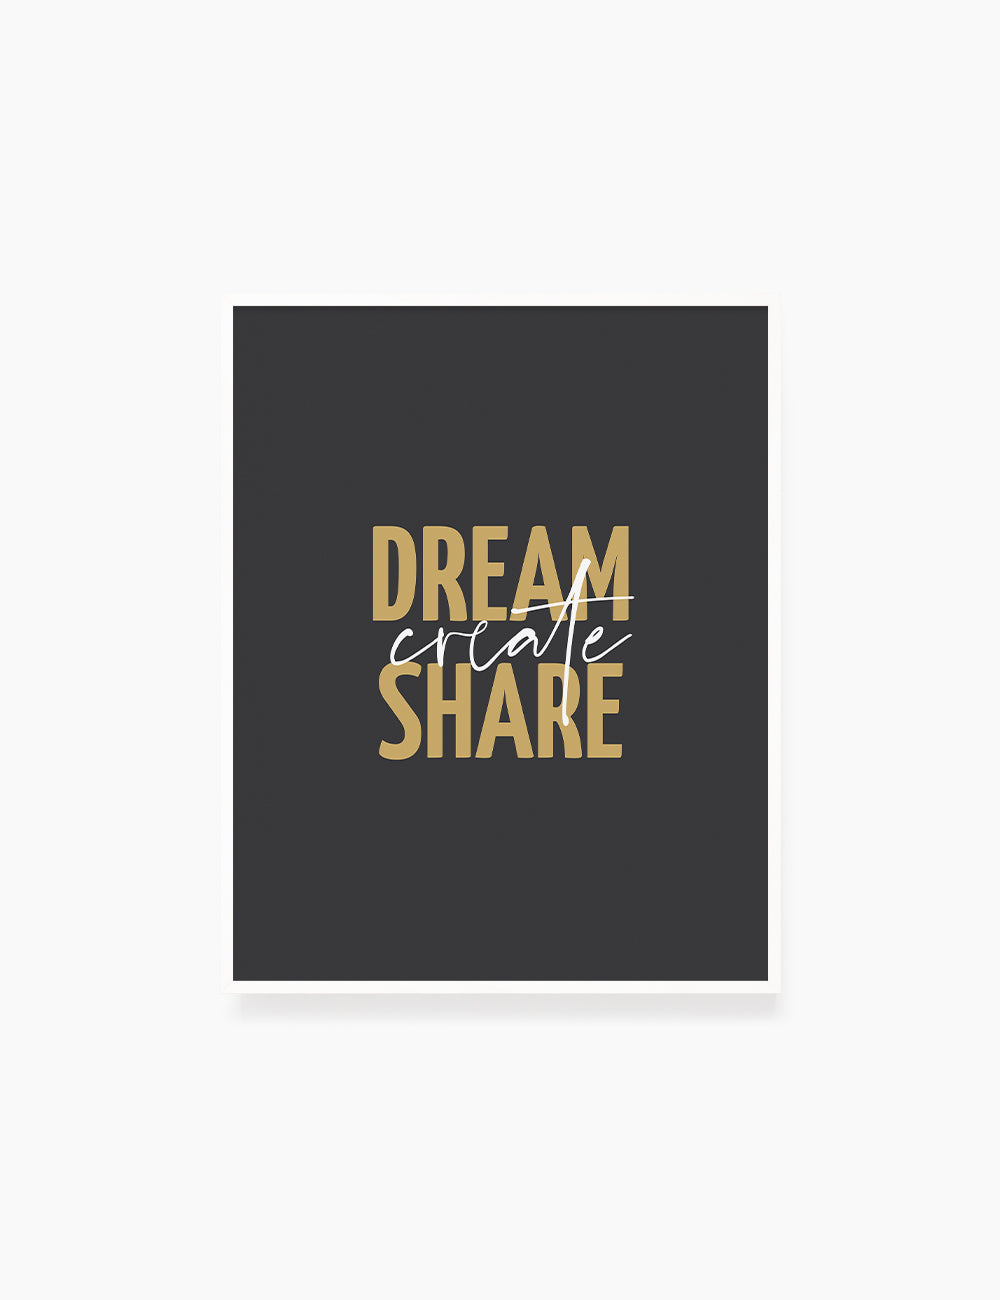 DREAM. CREATE. SHARE. Yellow Gold. Dark Grey. Black. Printable Wall Art Quote. - PAPER MOON Art & Design